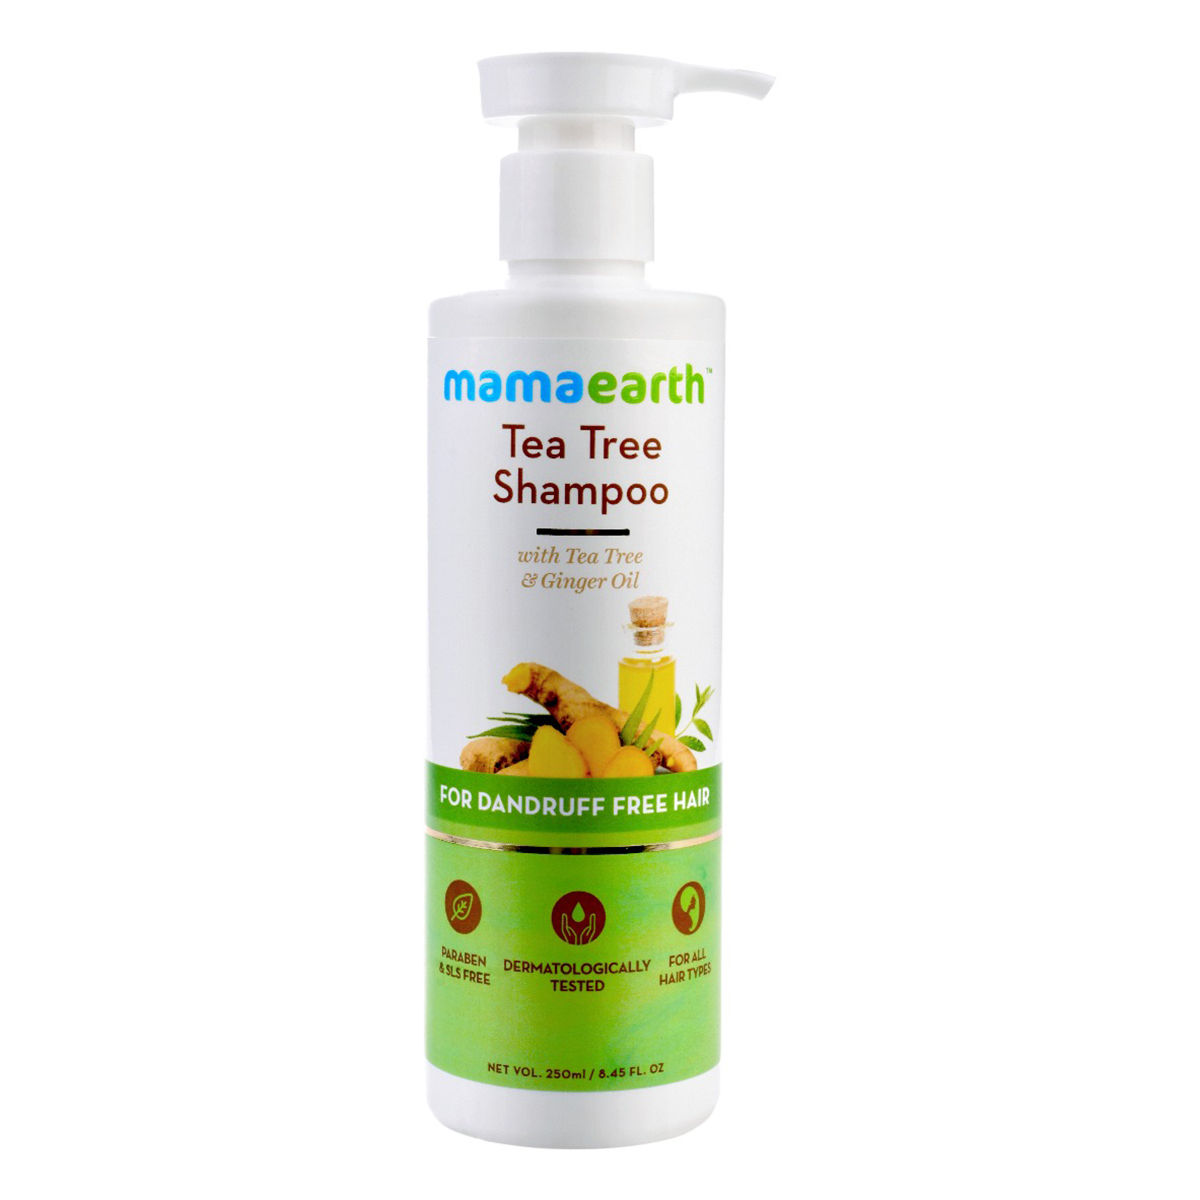 Mamaearth Tea Tree & Ginger Oil Shampoo, 250 ml, Pack of 1 